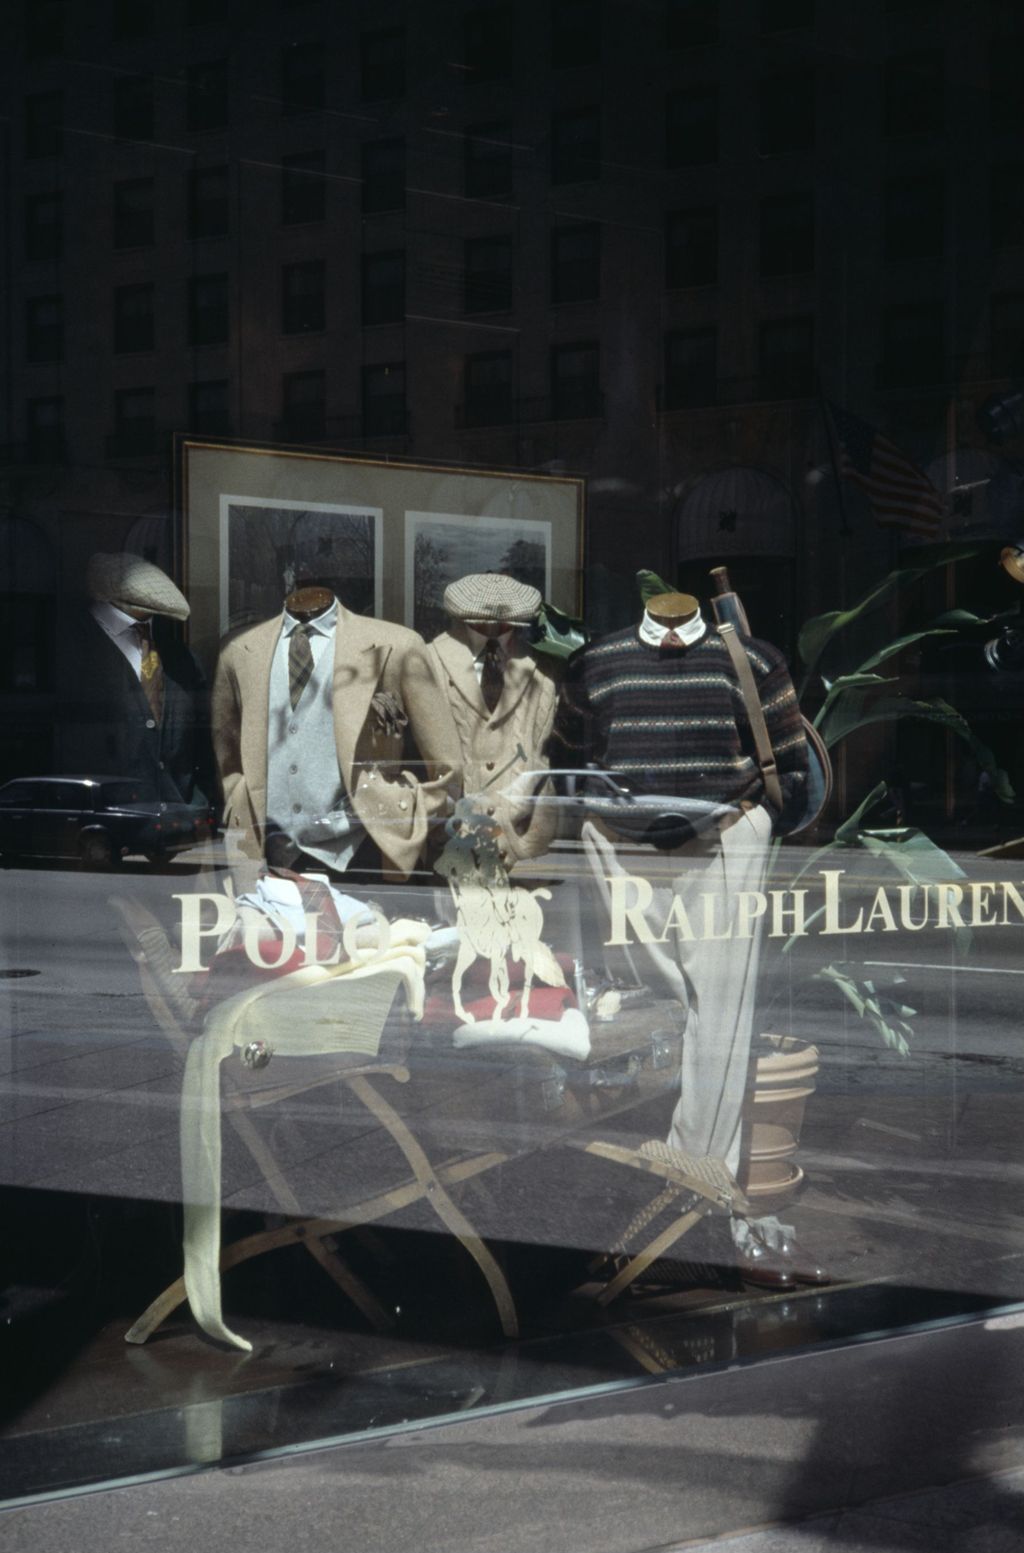 Ralph Lauren shop window, North Michigan Avenue